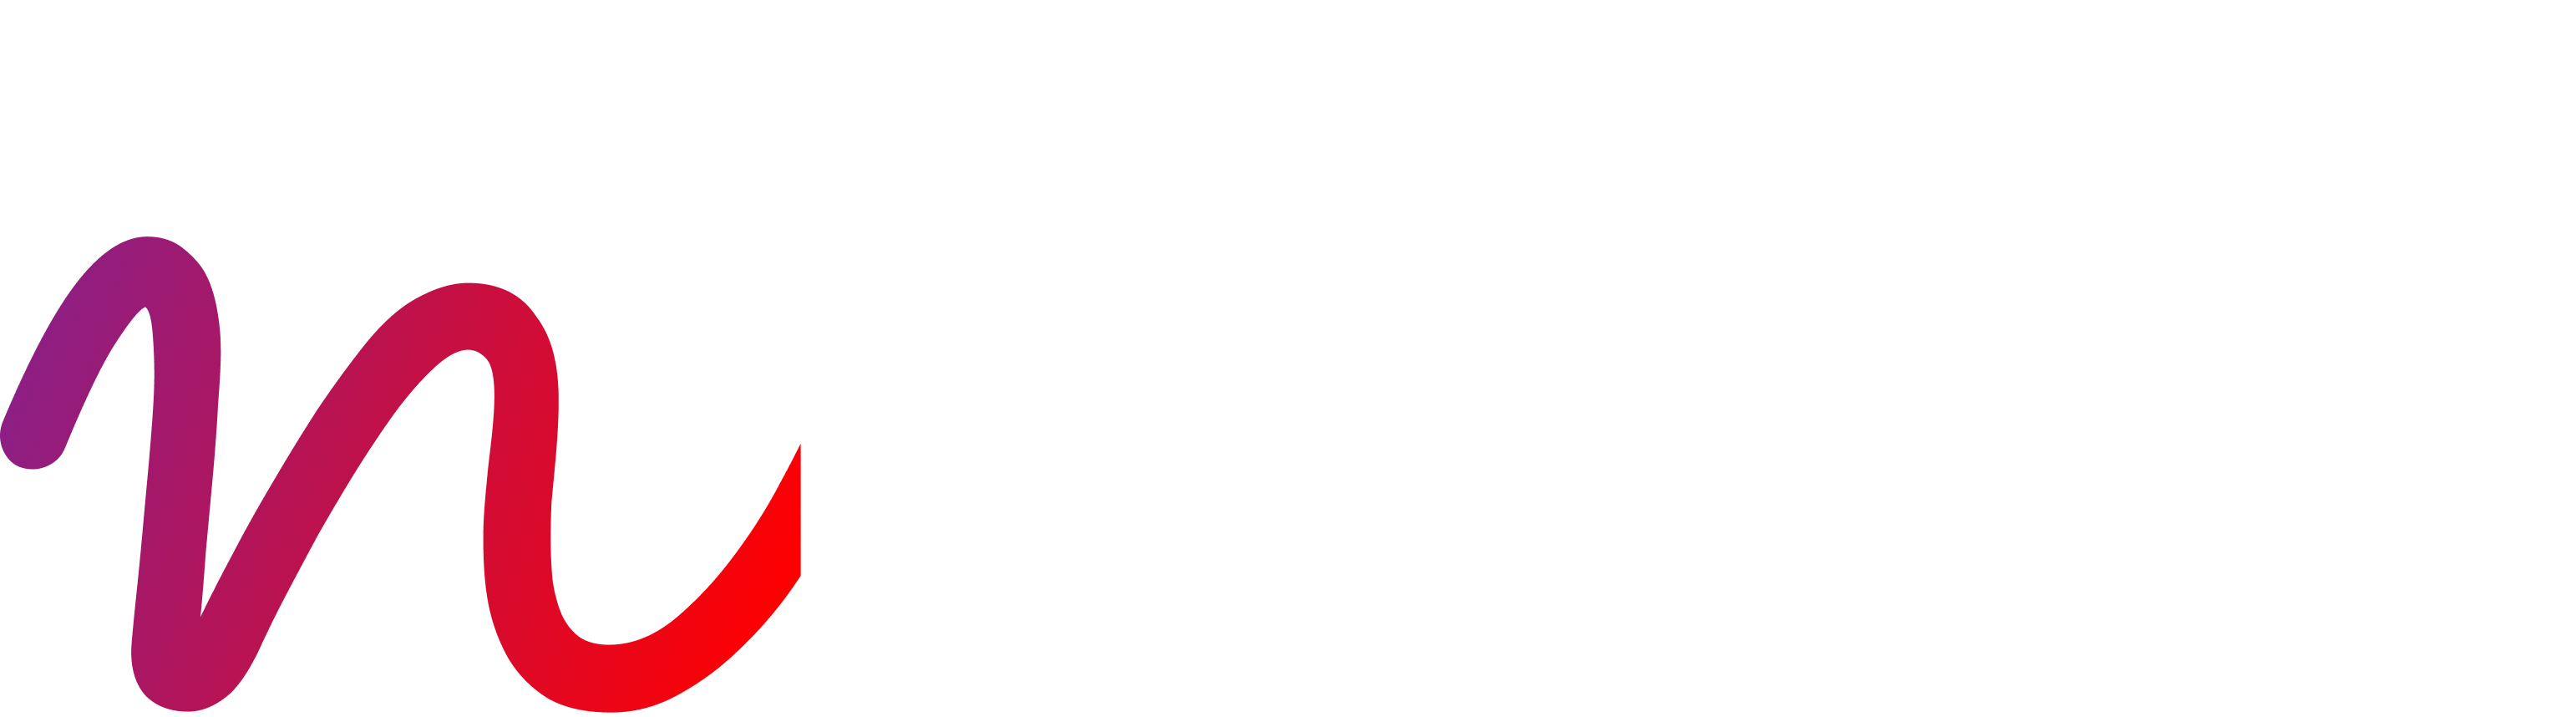 nBold logo